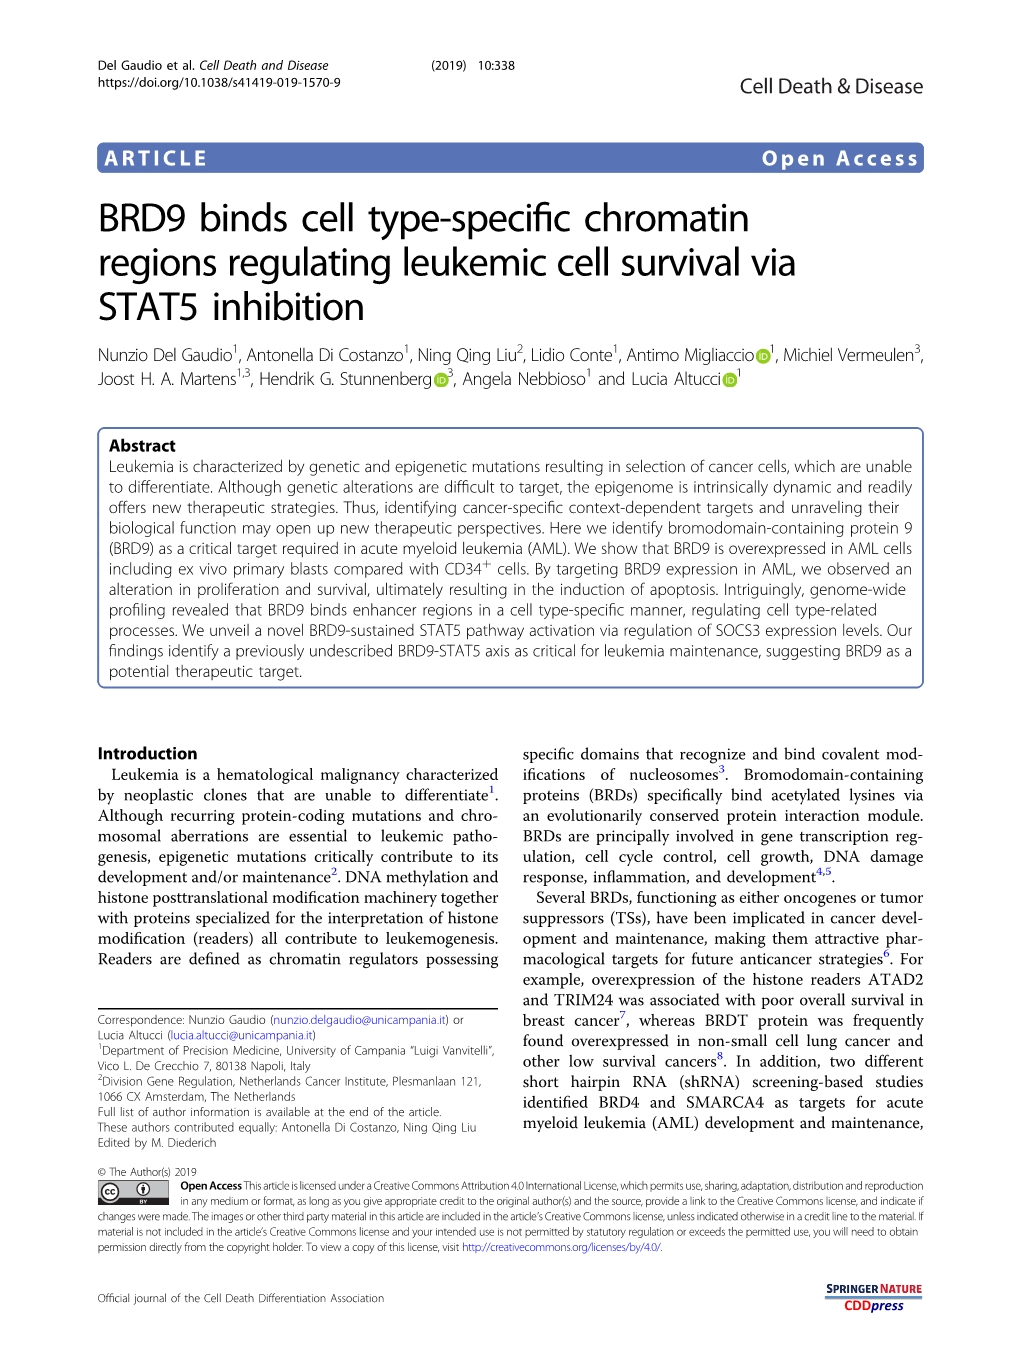 BRD9 Binds Cell Type-Specific Chromatin Regions Regulating